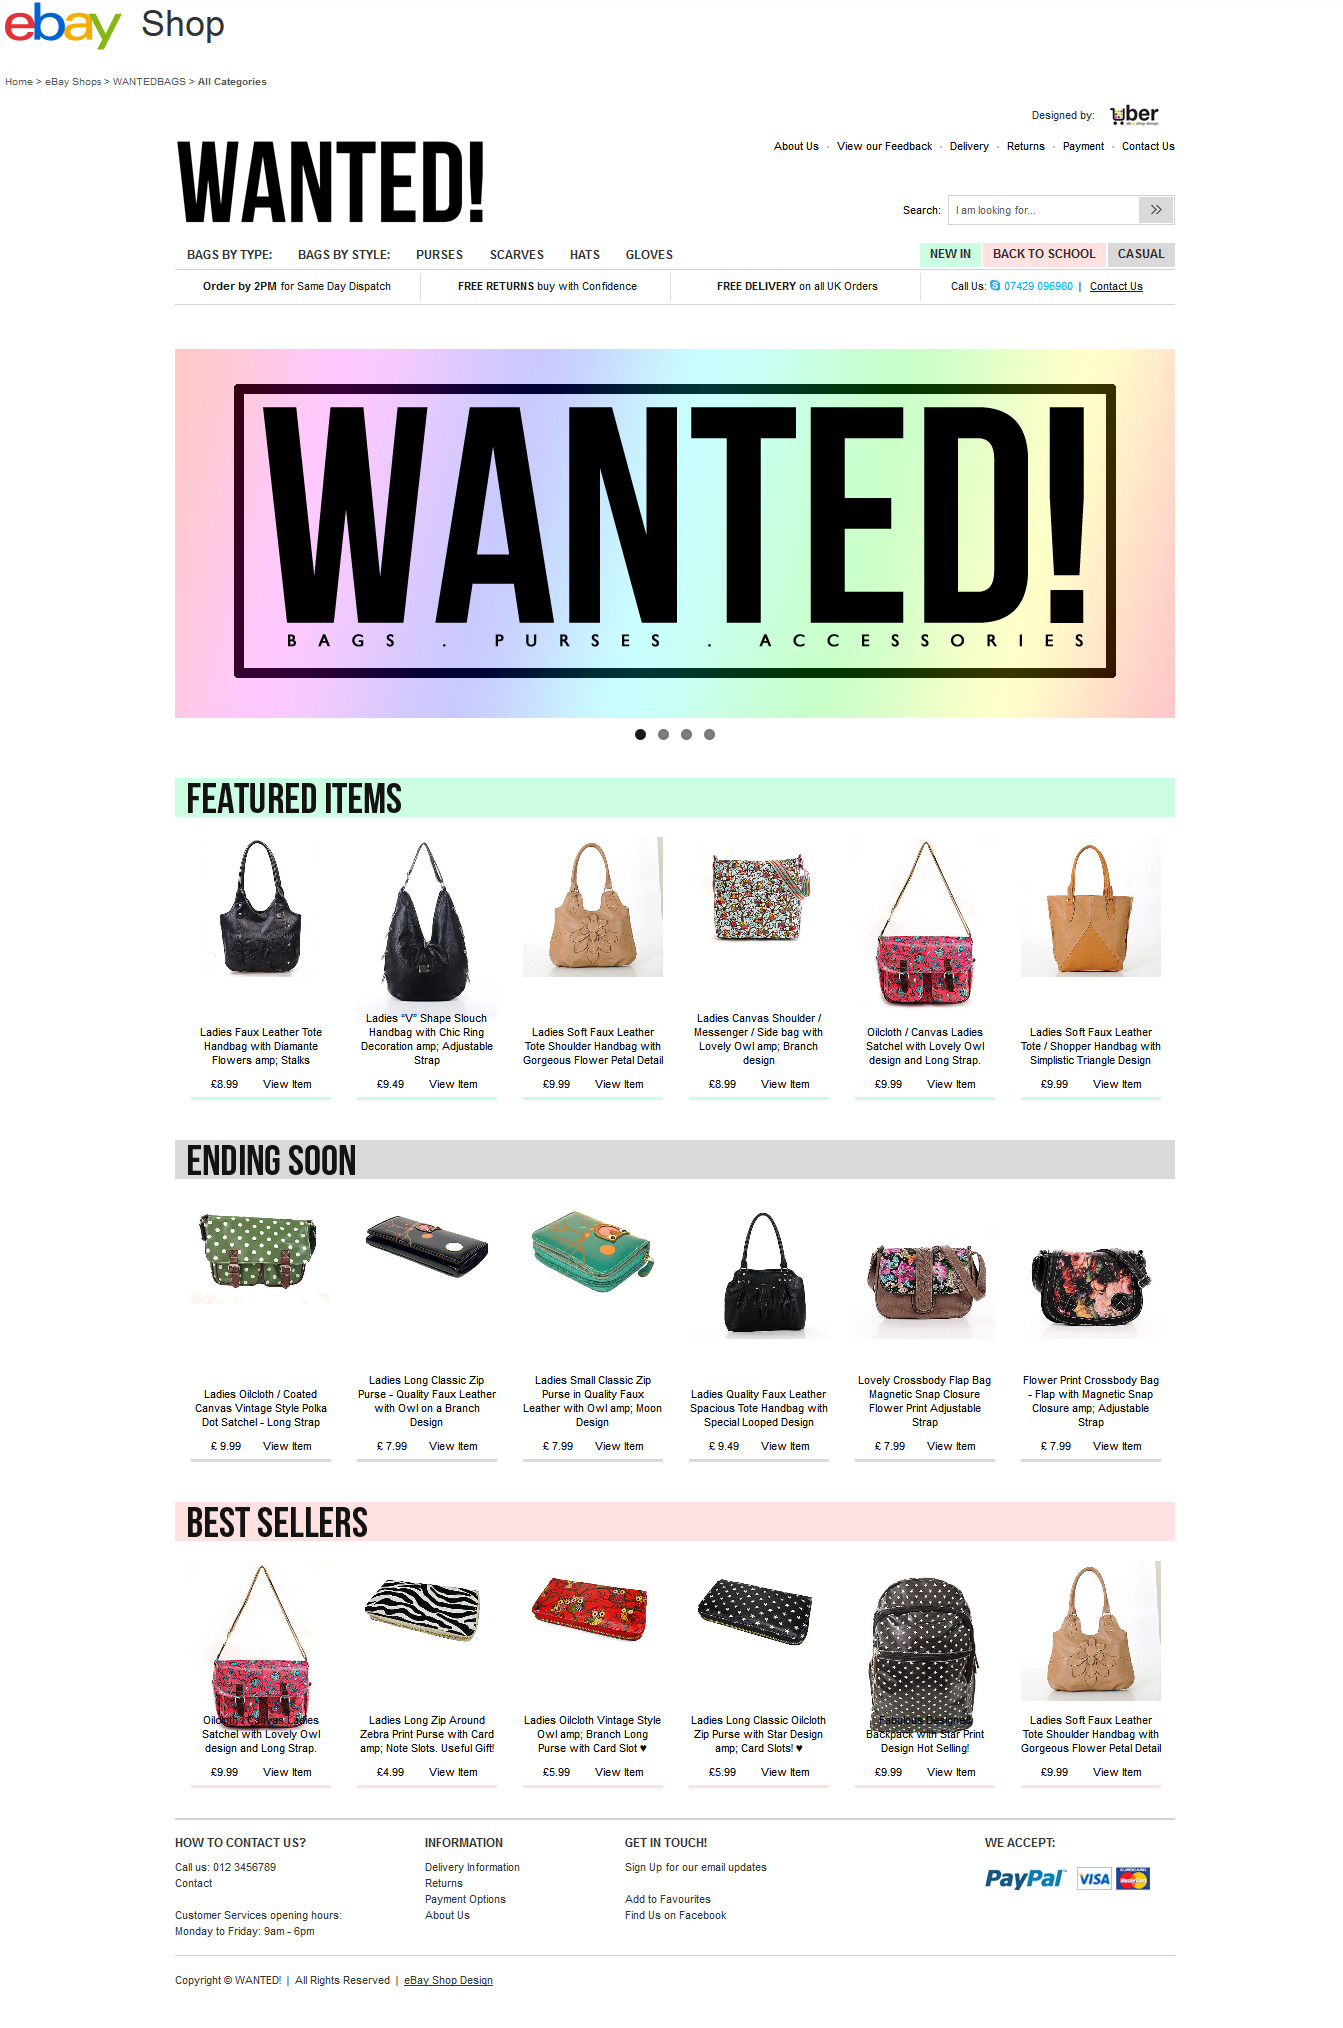 WantedBags ebay shop design